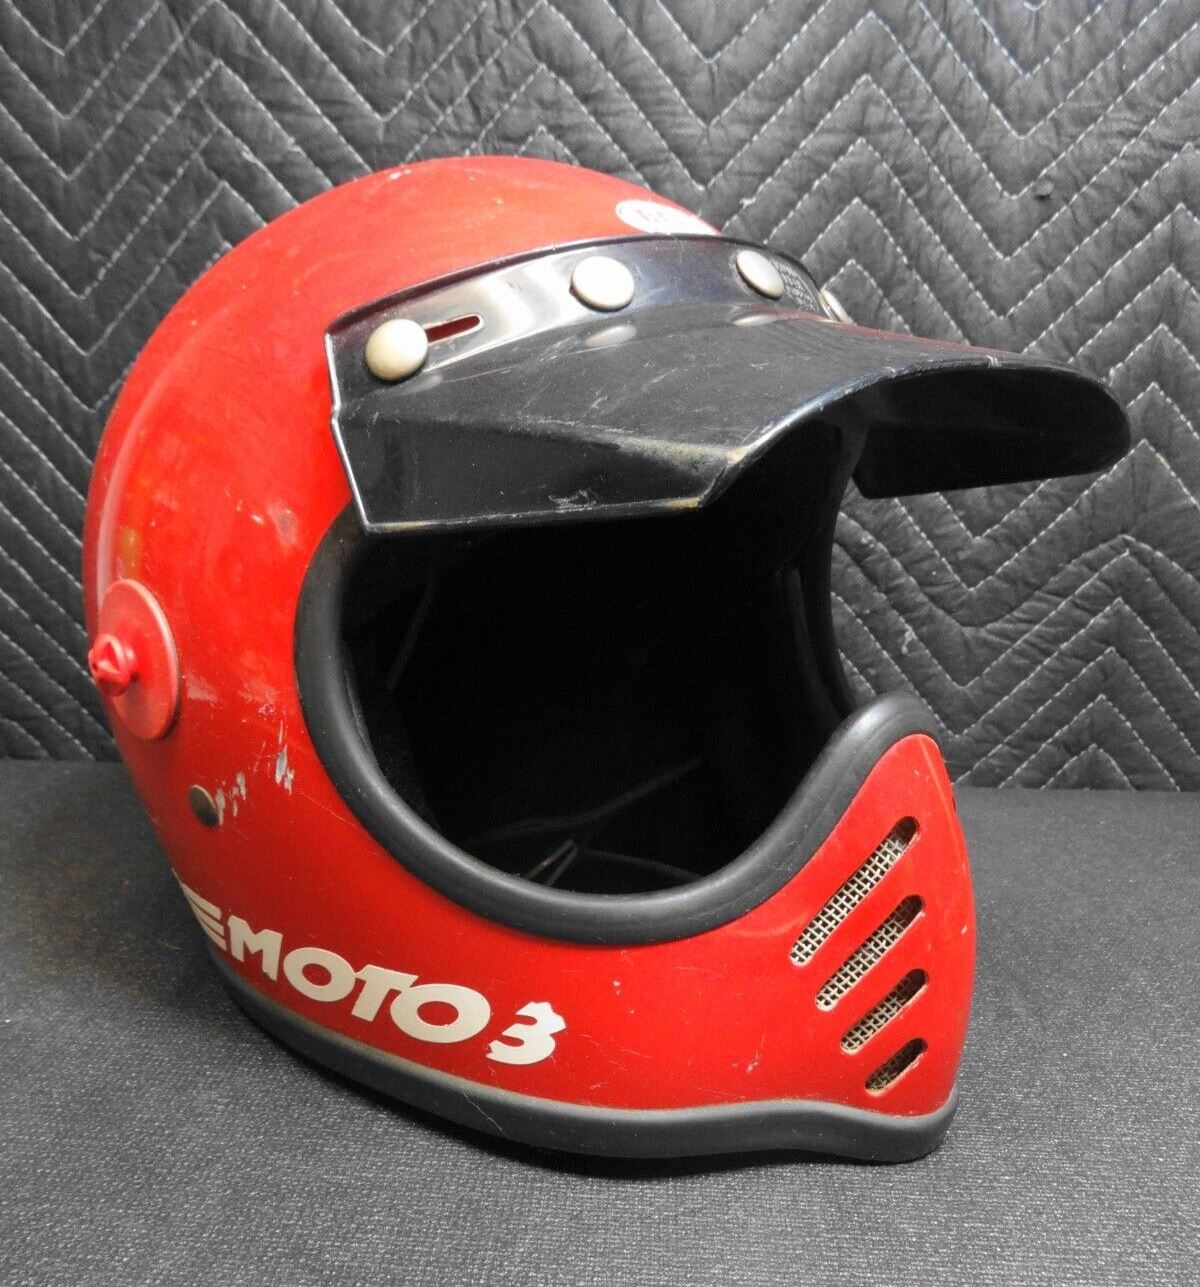 Vintage 1975 Bell Moto Star 3 Helmet in Red w/ Visor - Size 7-1/4